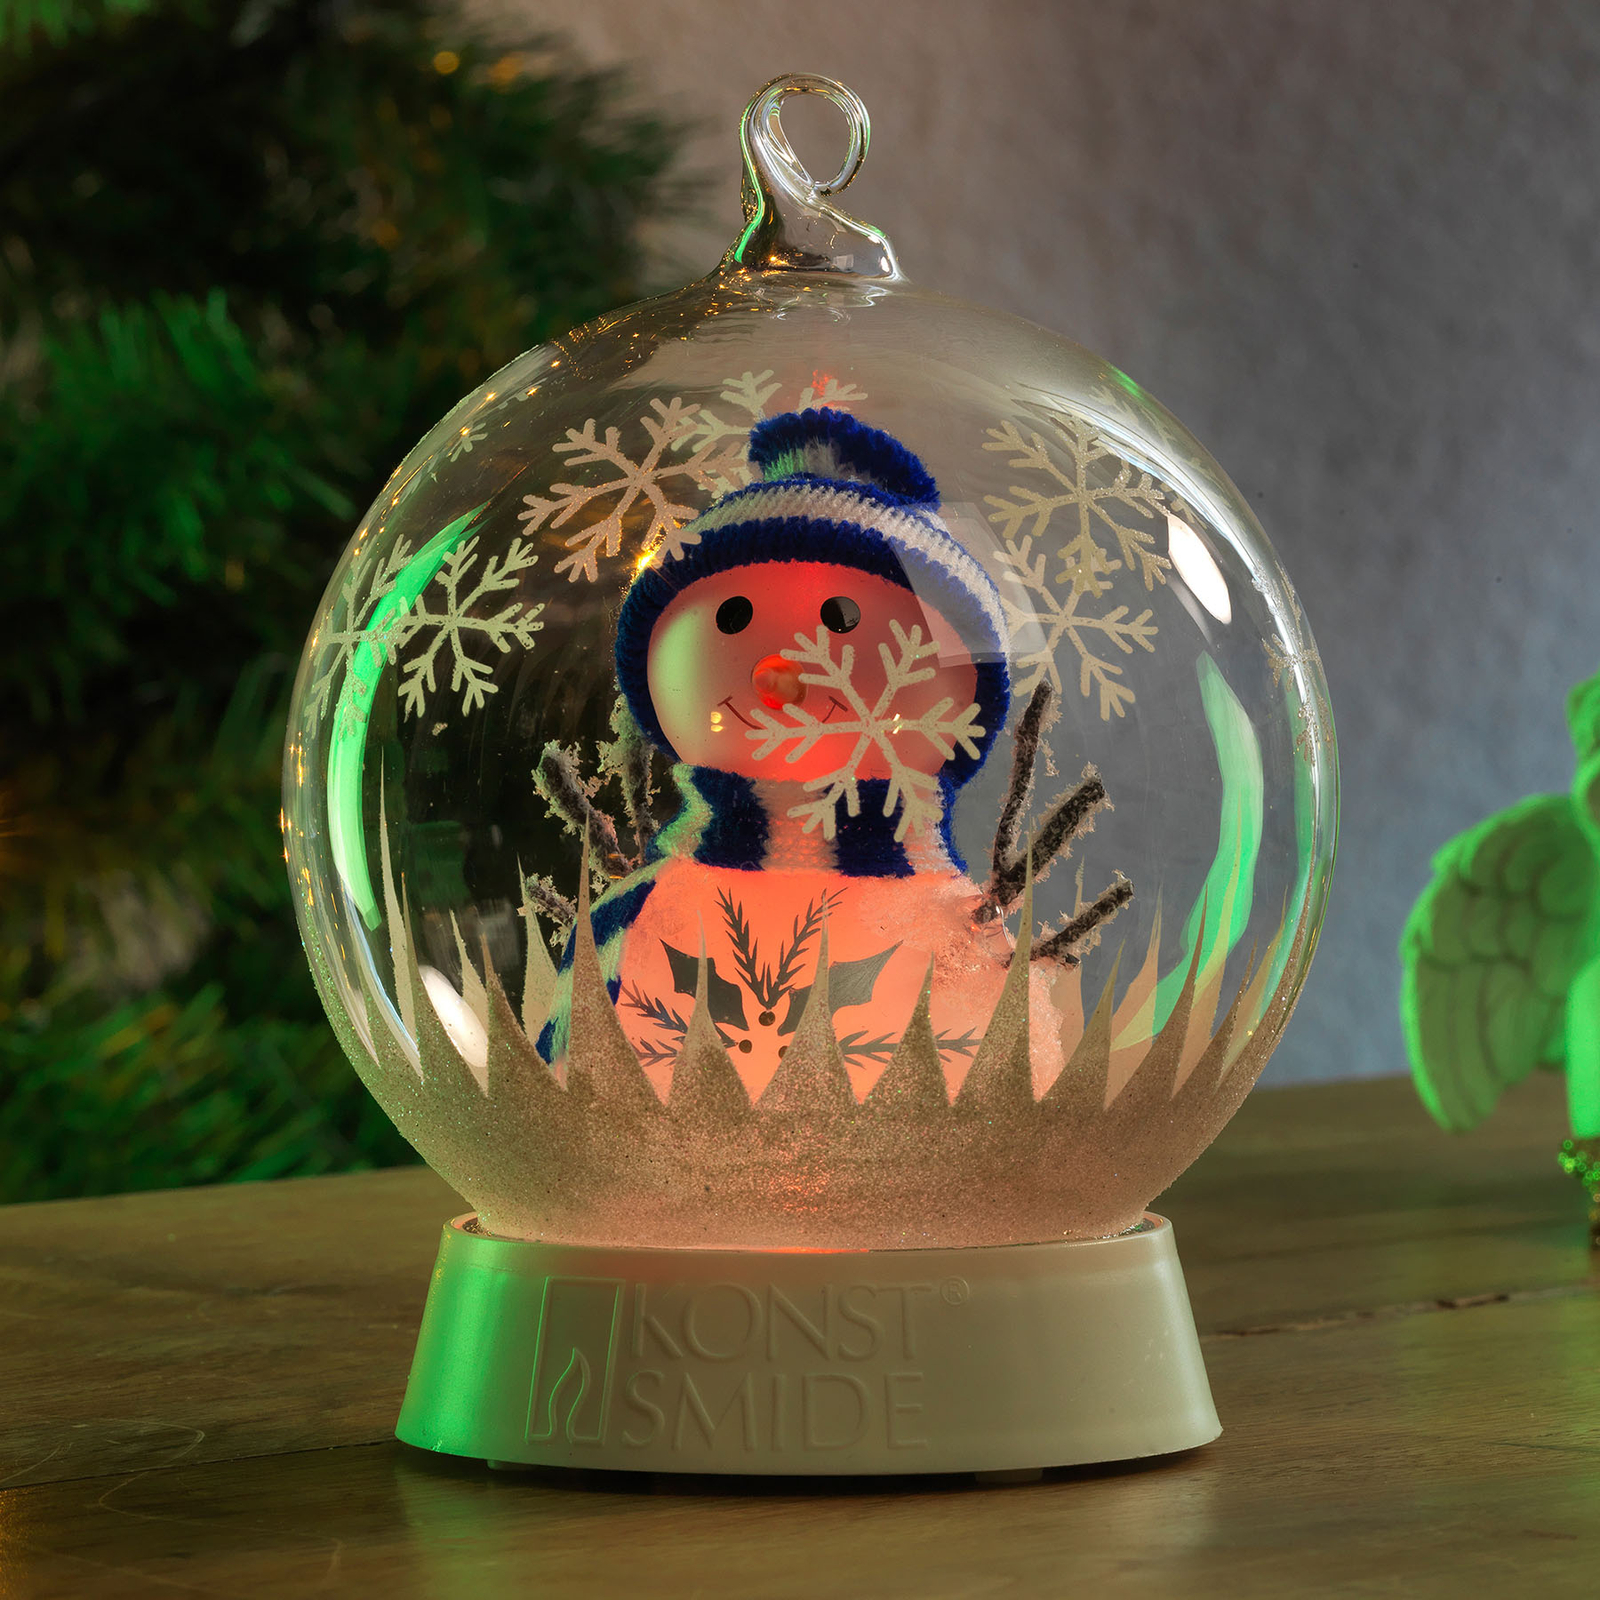 LED sfeerlamp glasbol sneeuwpop